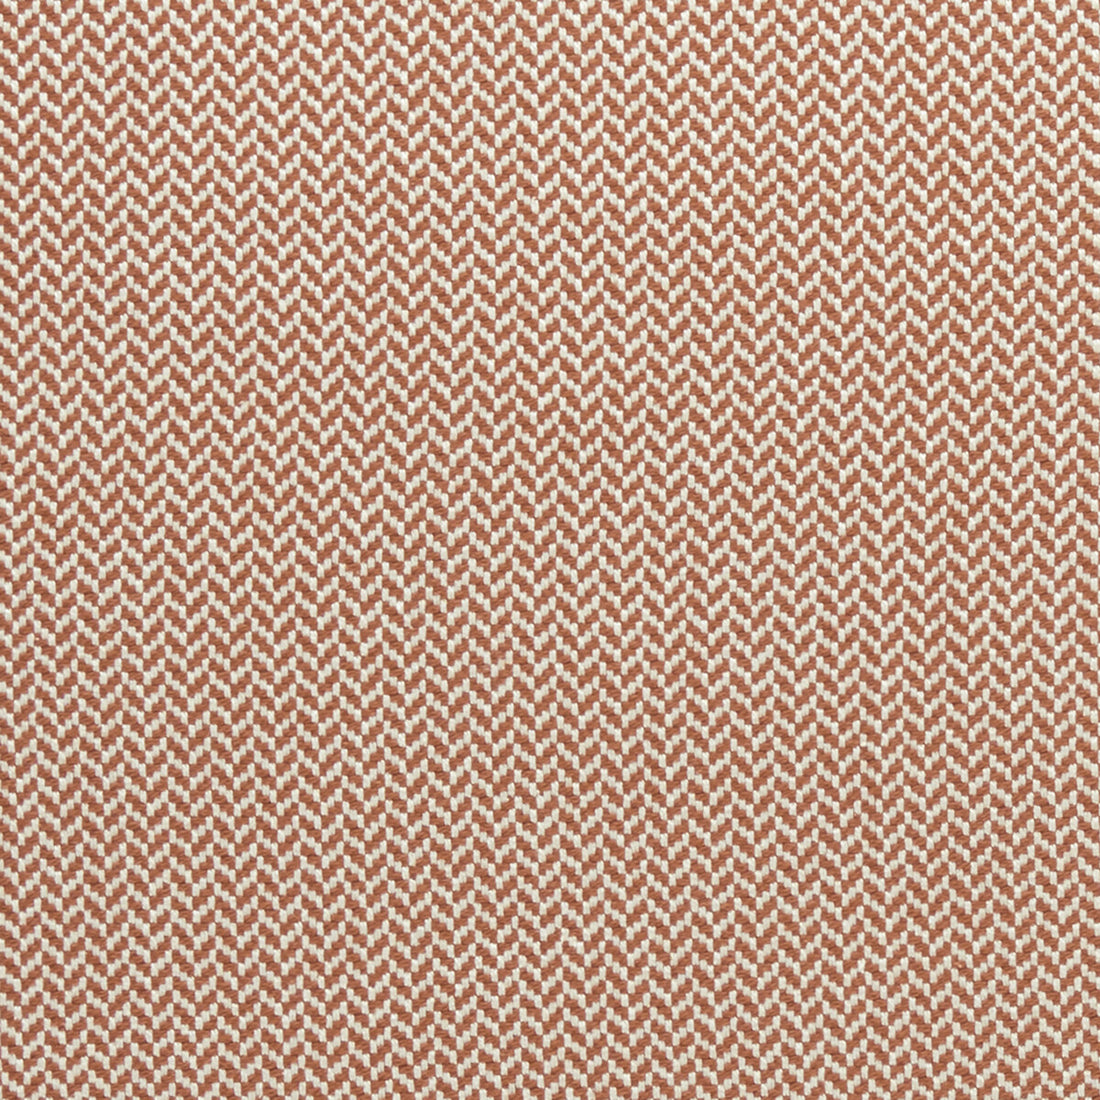 Zalika fabric in cinnabar color - pattern F0963/02.CAC.0 - by Clarke And Clarke in the Clarke &amp; Clarke Amara collection